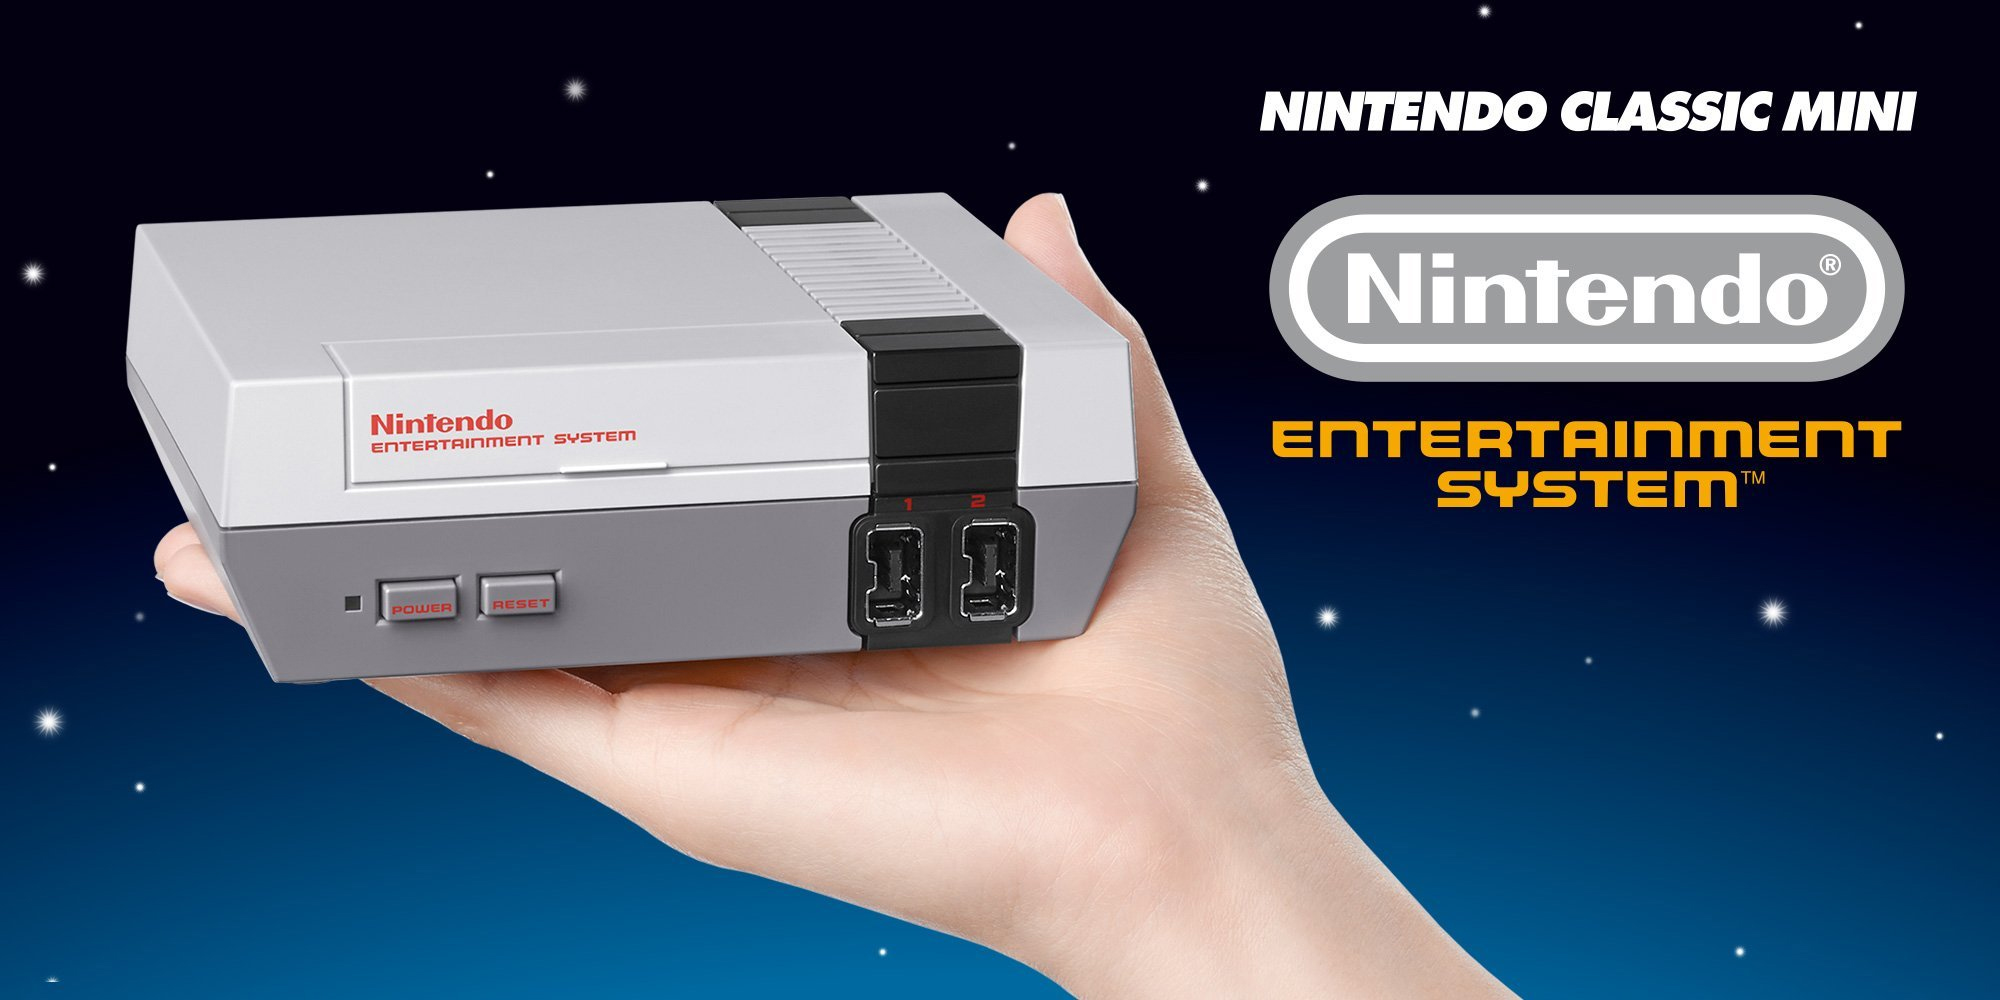 Nintendo discontinuing the mini NES Classic Edition